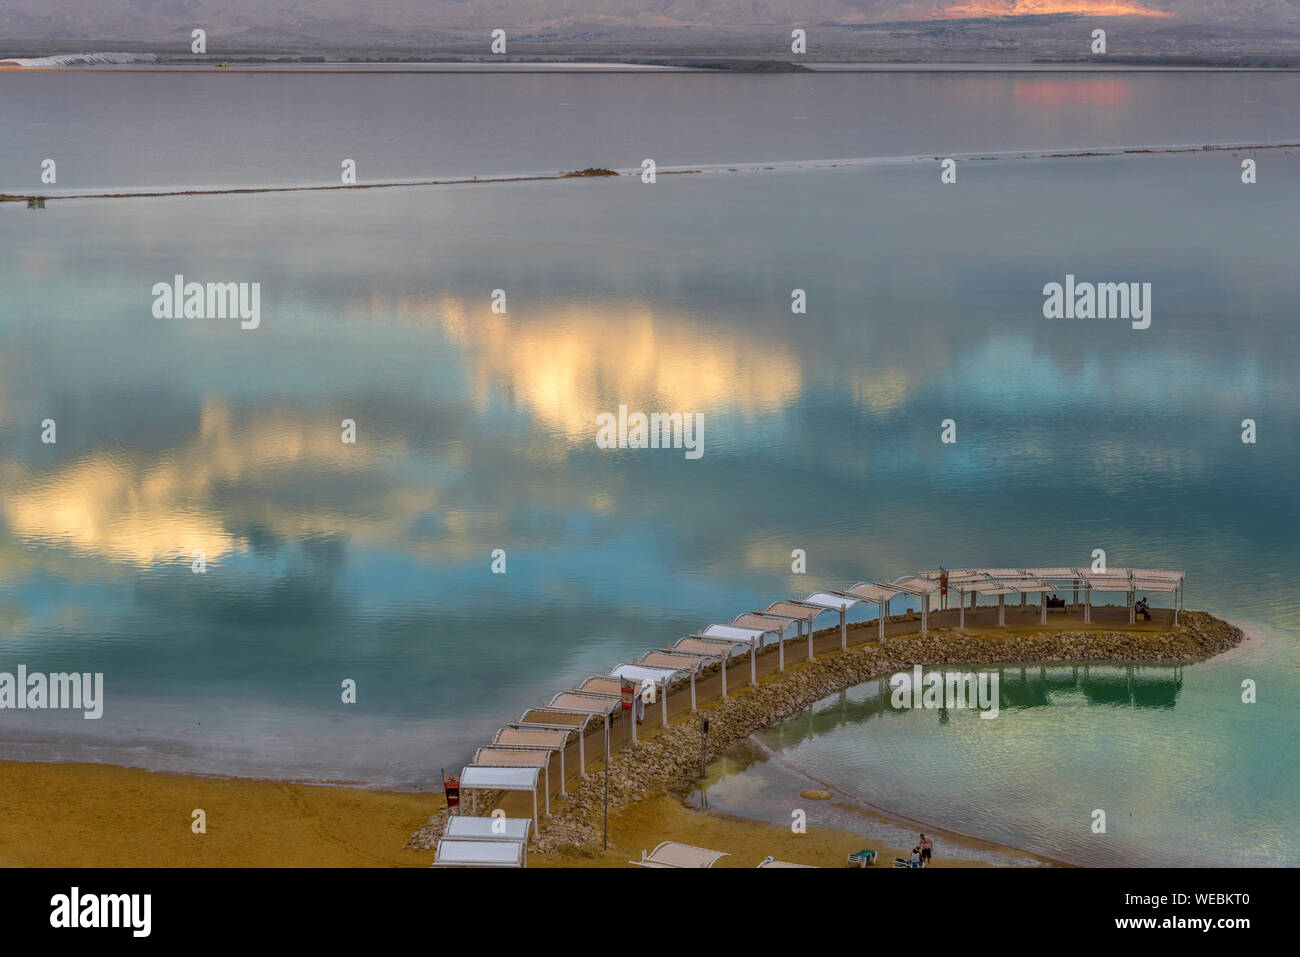 Beach facilities at the Dead sea, Israel Stock Photo